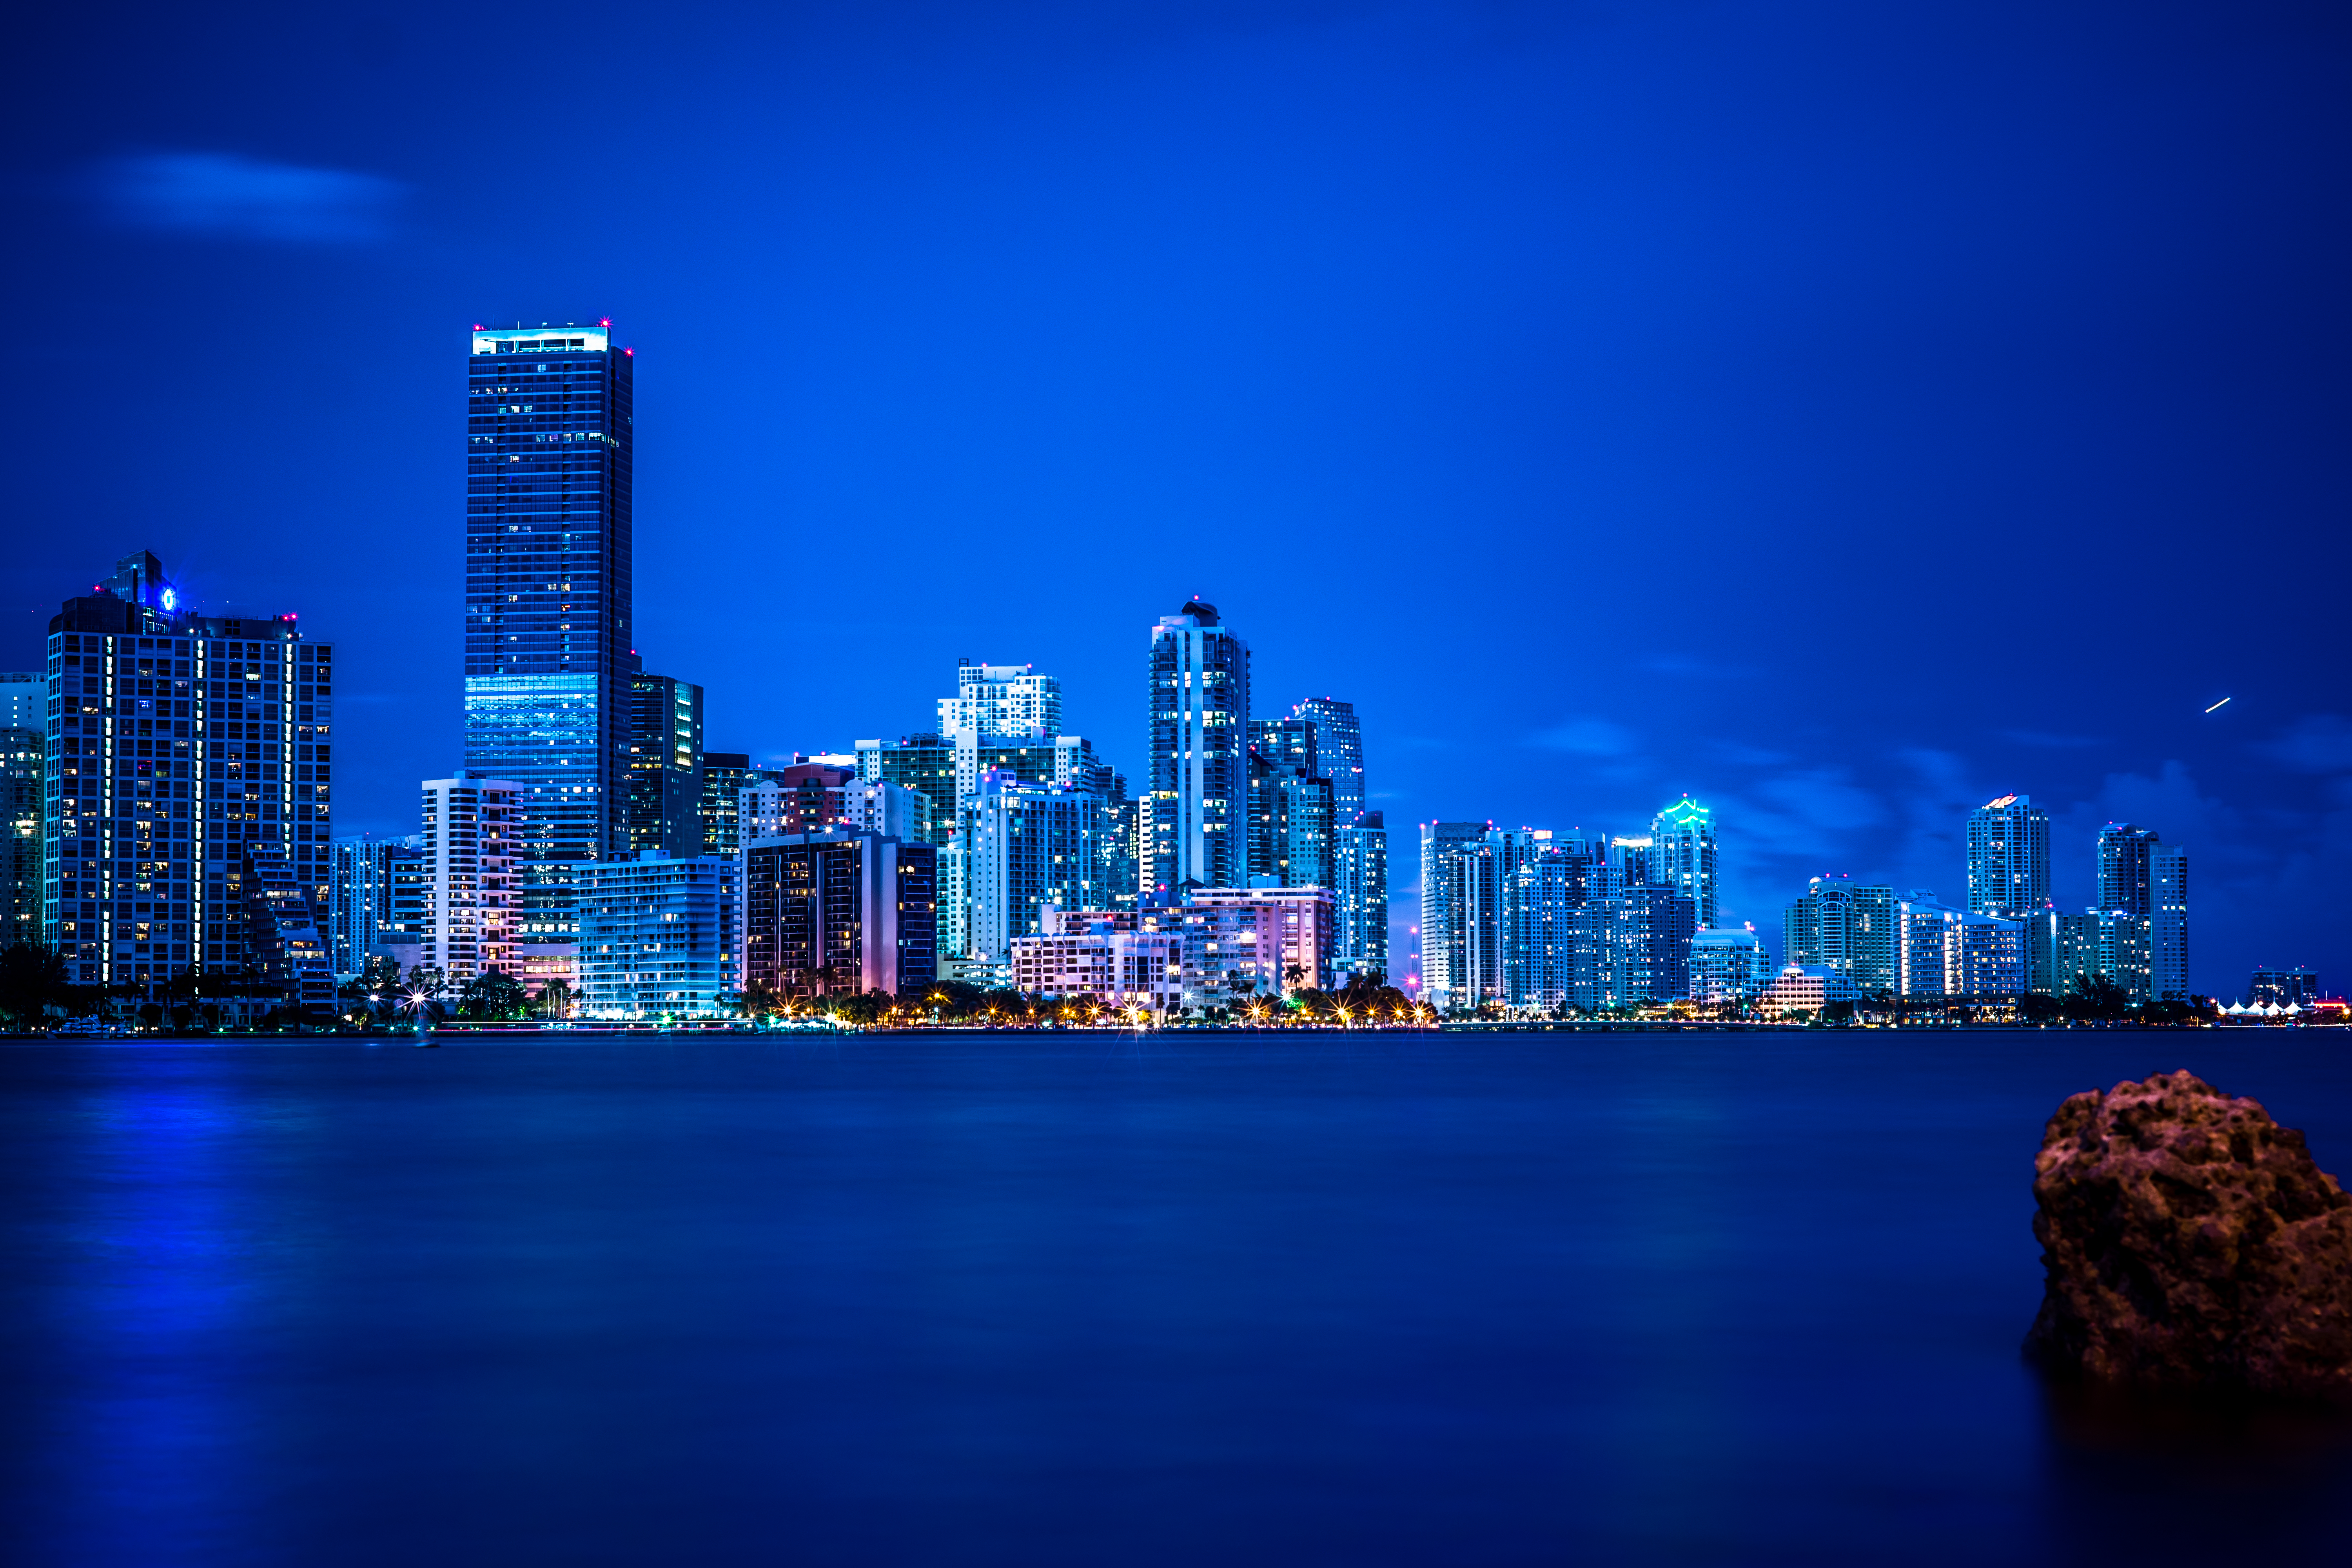 FL florida lights Miami at Night panorama blue background